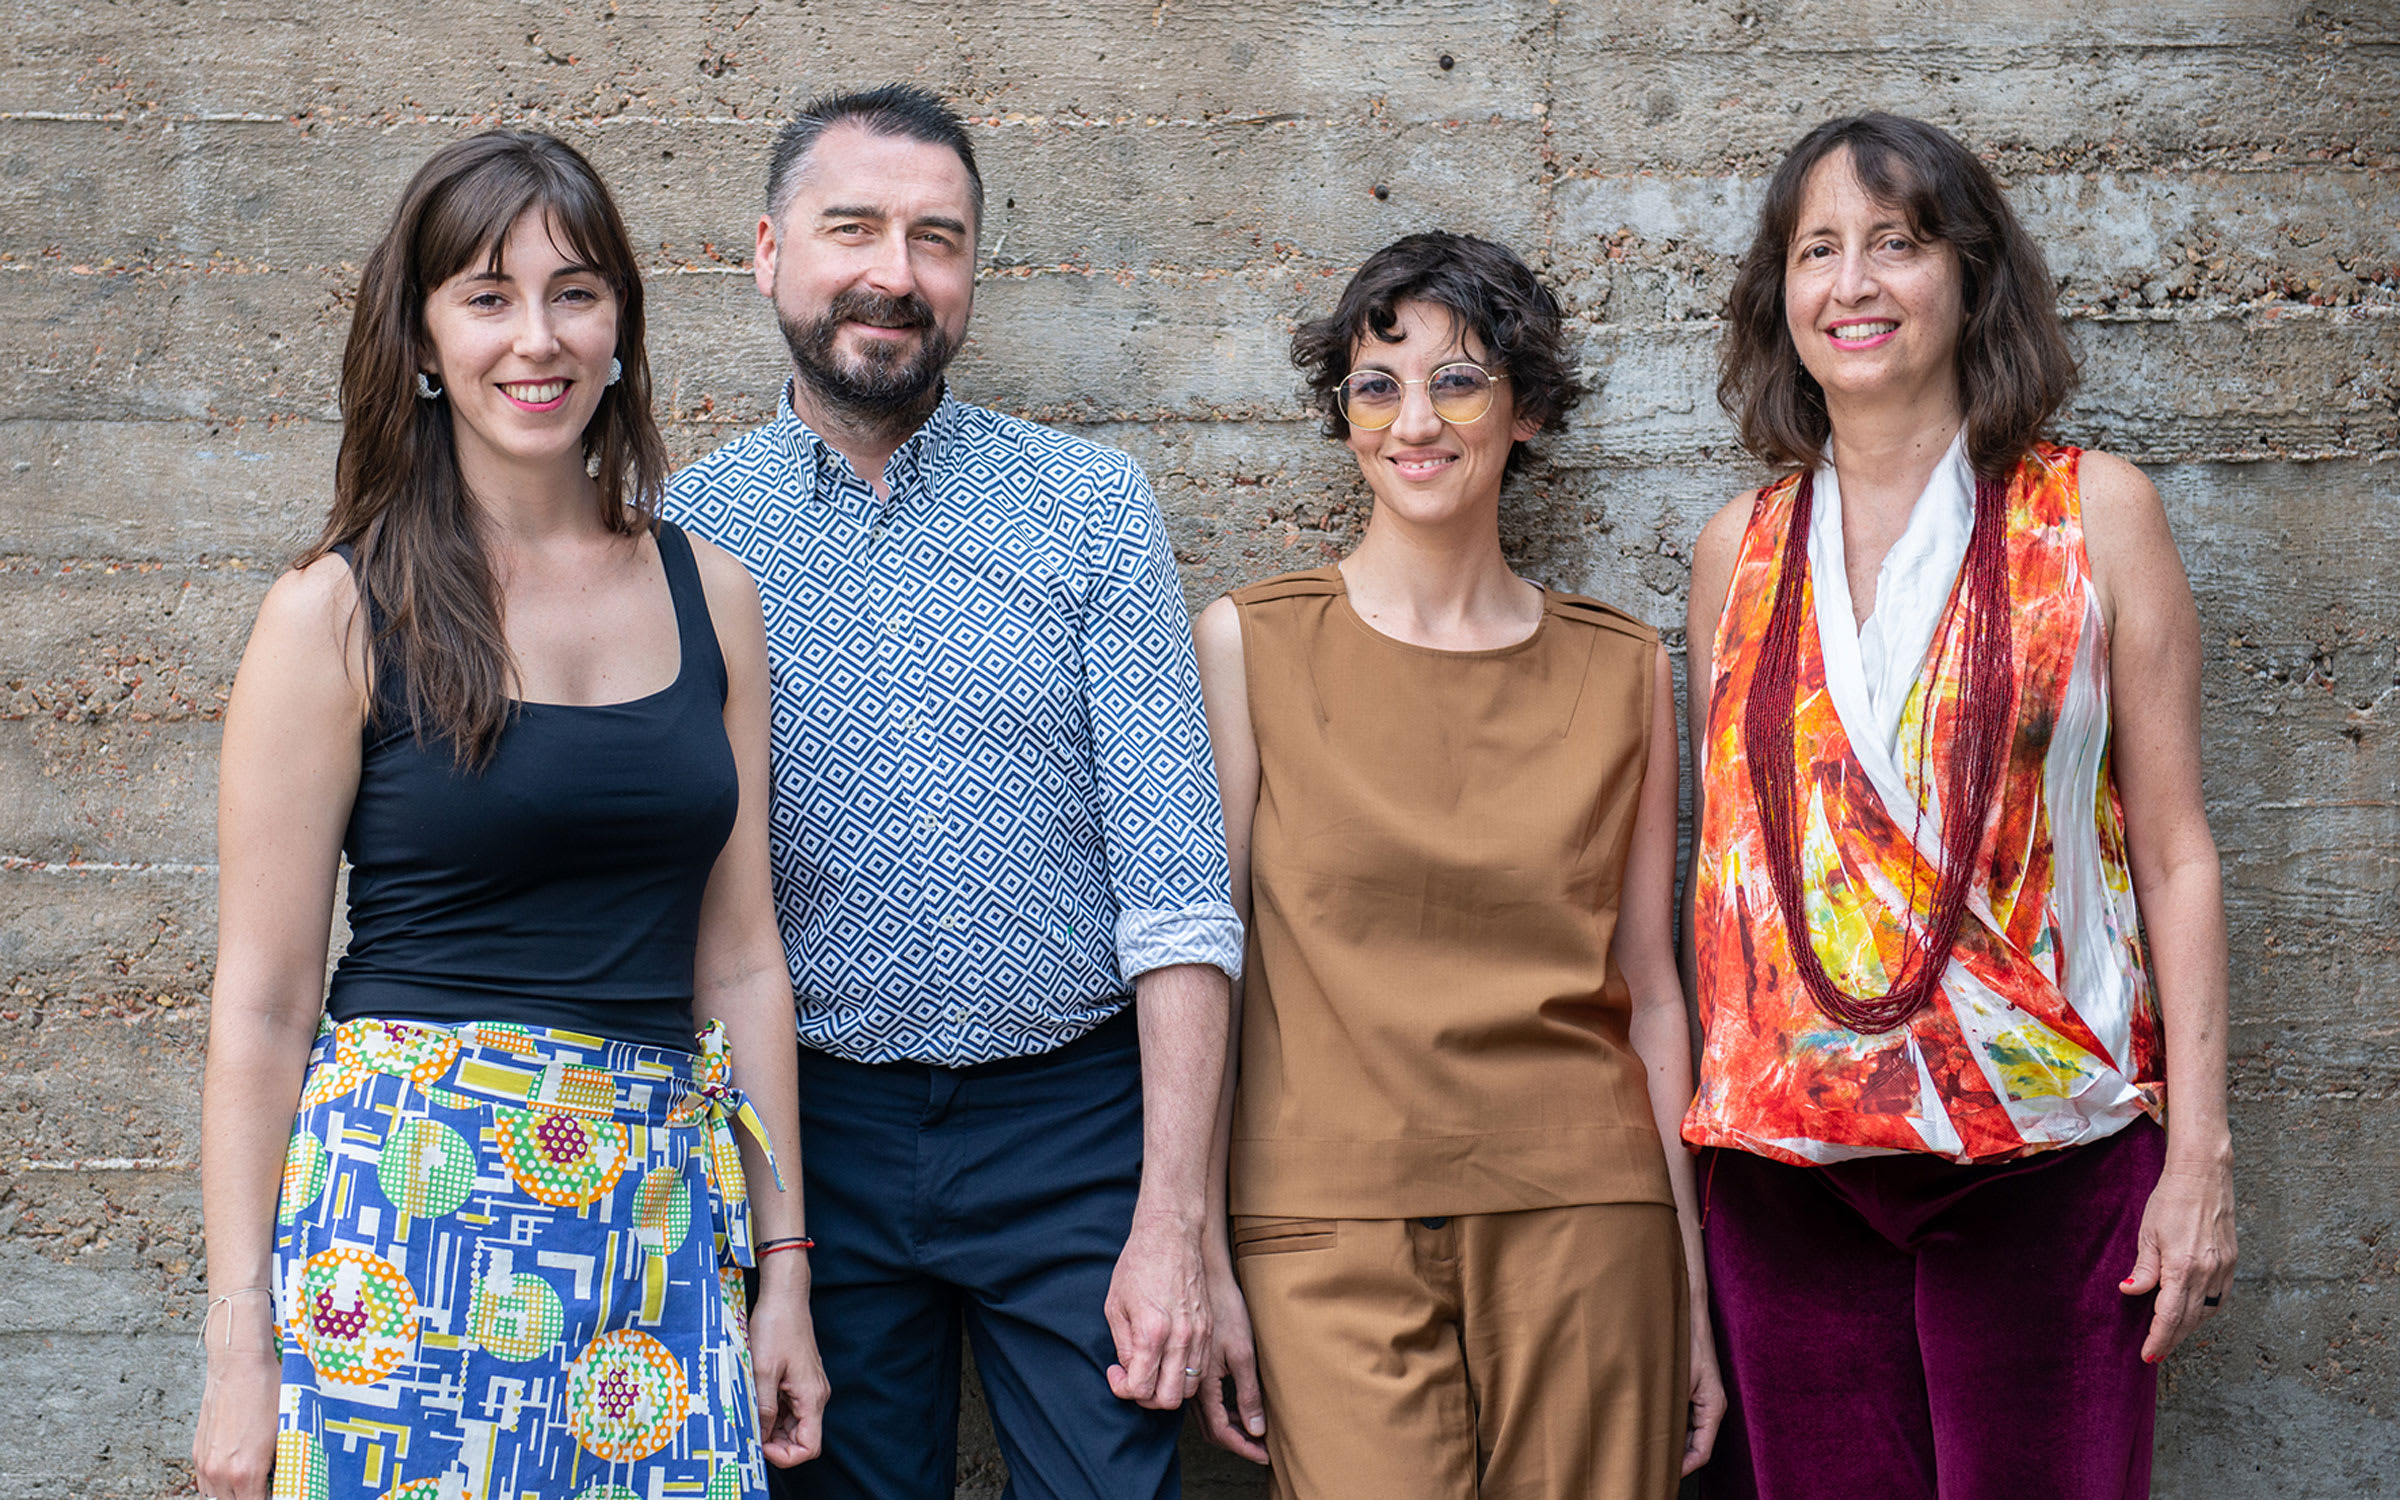 The curators of the 11th Berlin Biennale for Contemporary Art, from left to right: Renata Cervetto, Agustín Pérez Rubio, María Berríos, and Lisette Lagnado. Photo by F. Anthea Schaap.